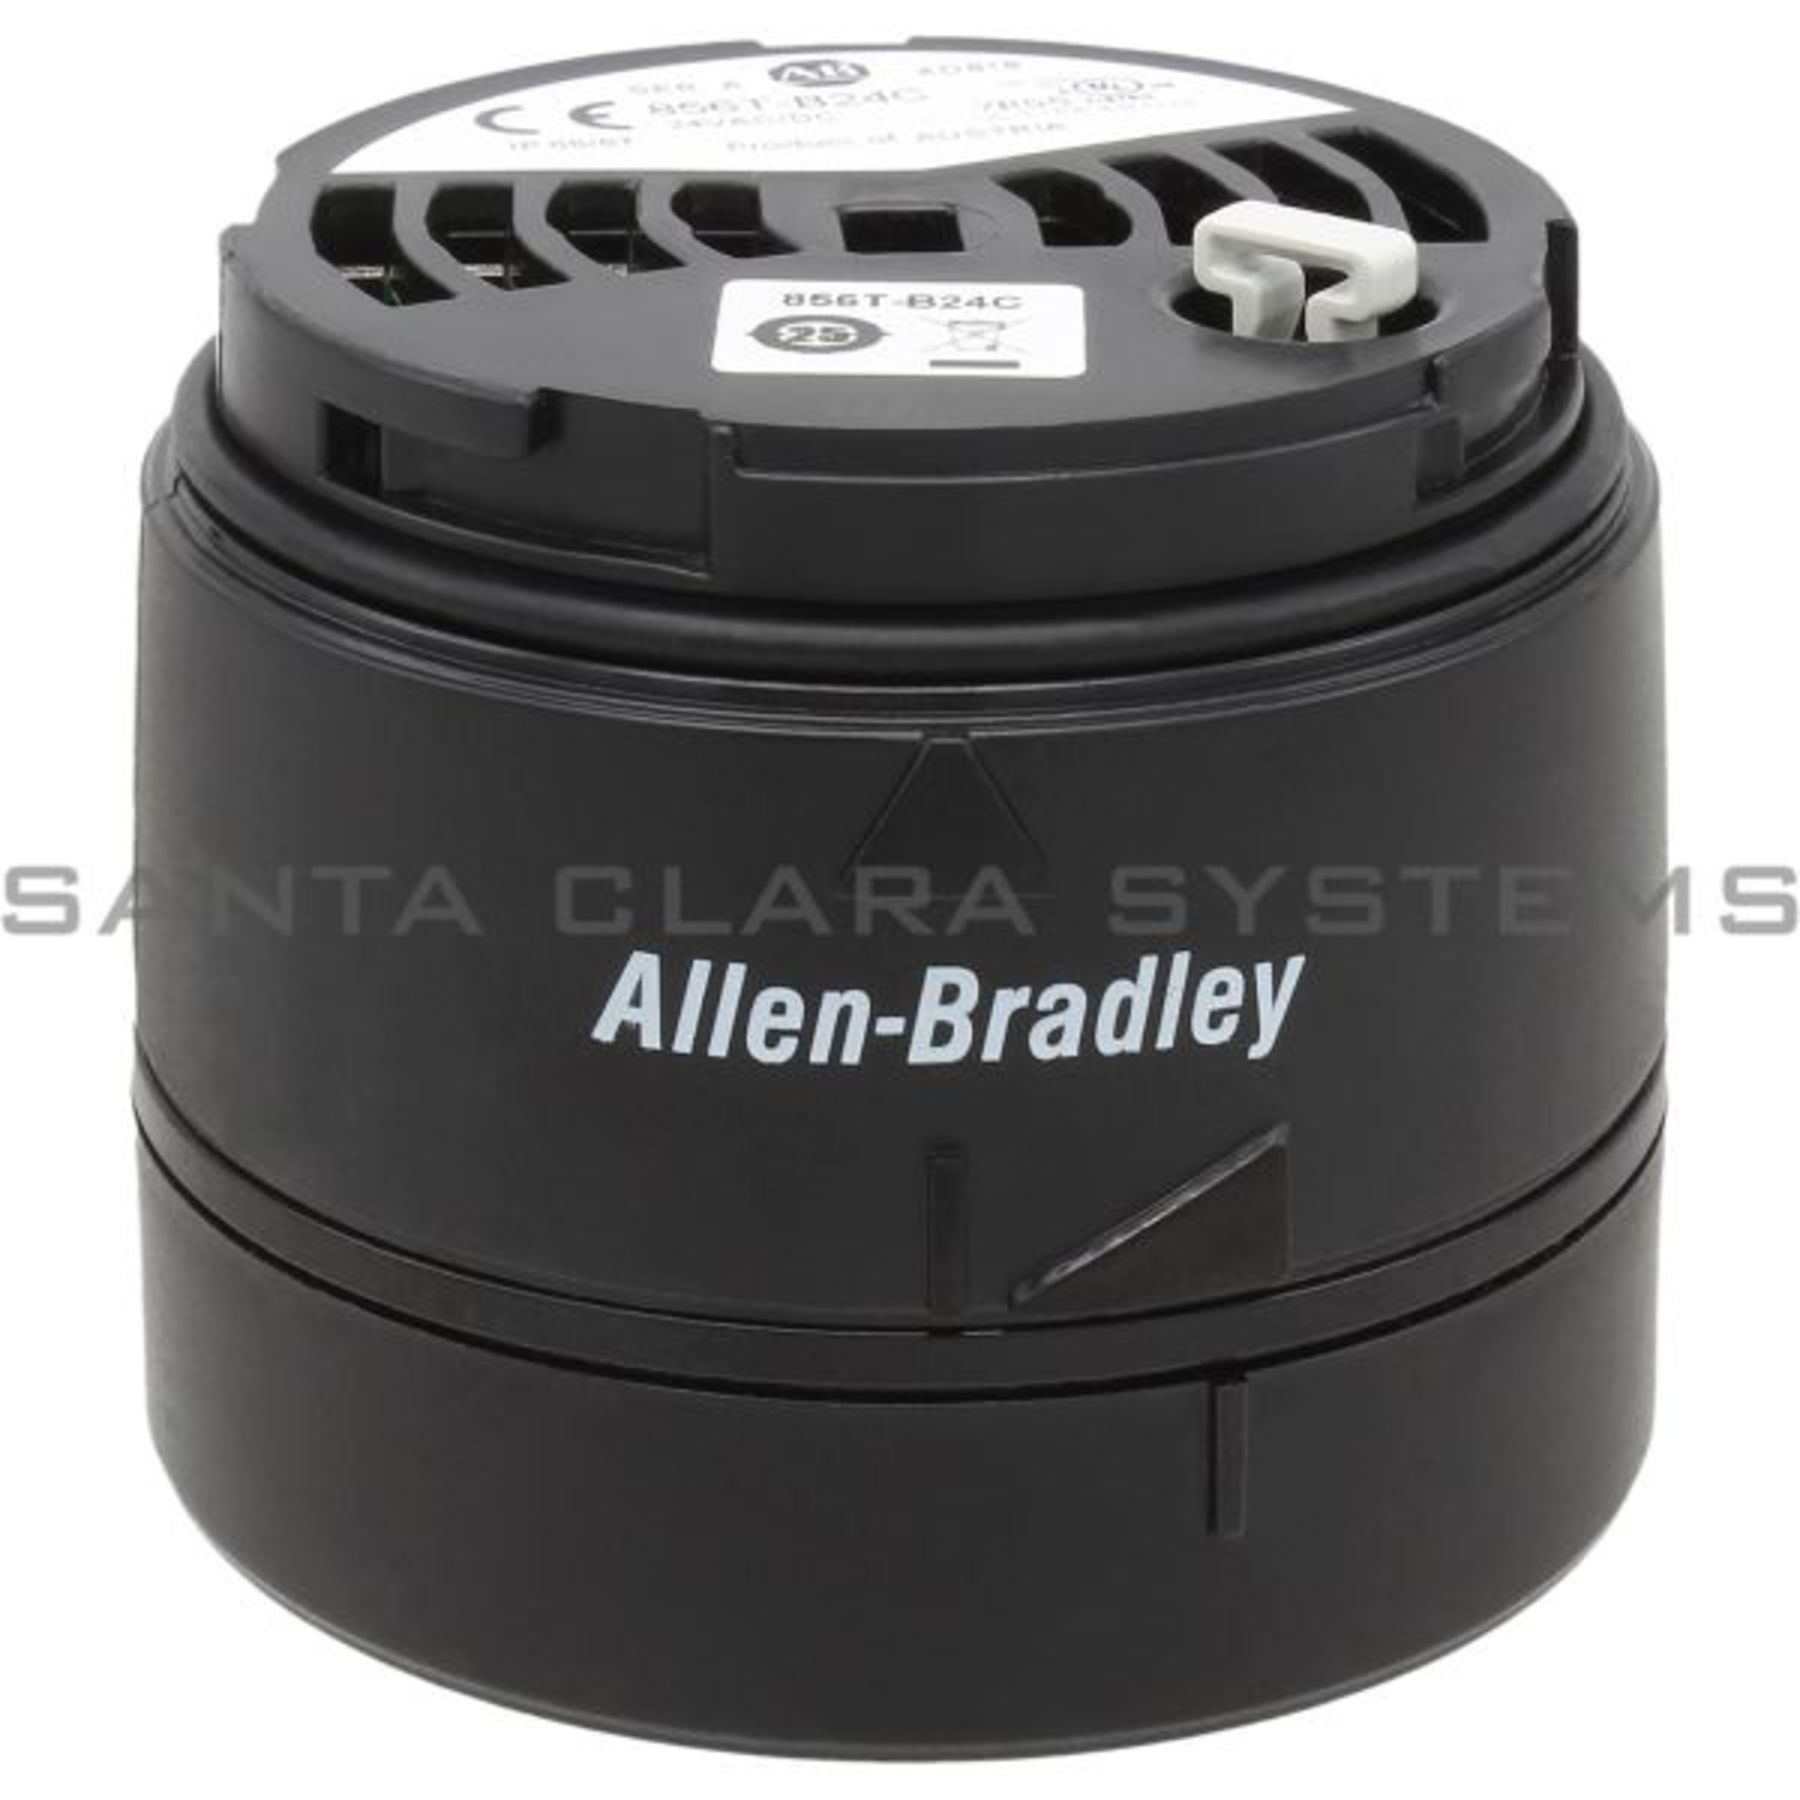 US$ 337.74 - New sealed Allen Bradley 1734-IB8SK POINT Digital Input 24V DC  8-Ch Safety-Rated - m. - plc manufacturers, PLC supplier,  PLC distributor